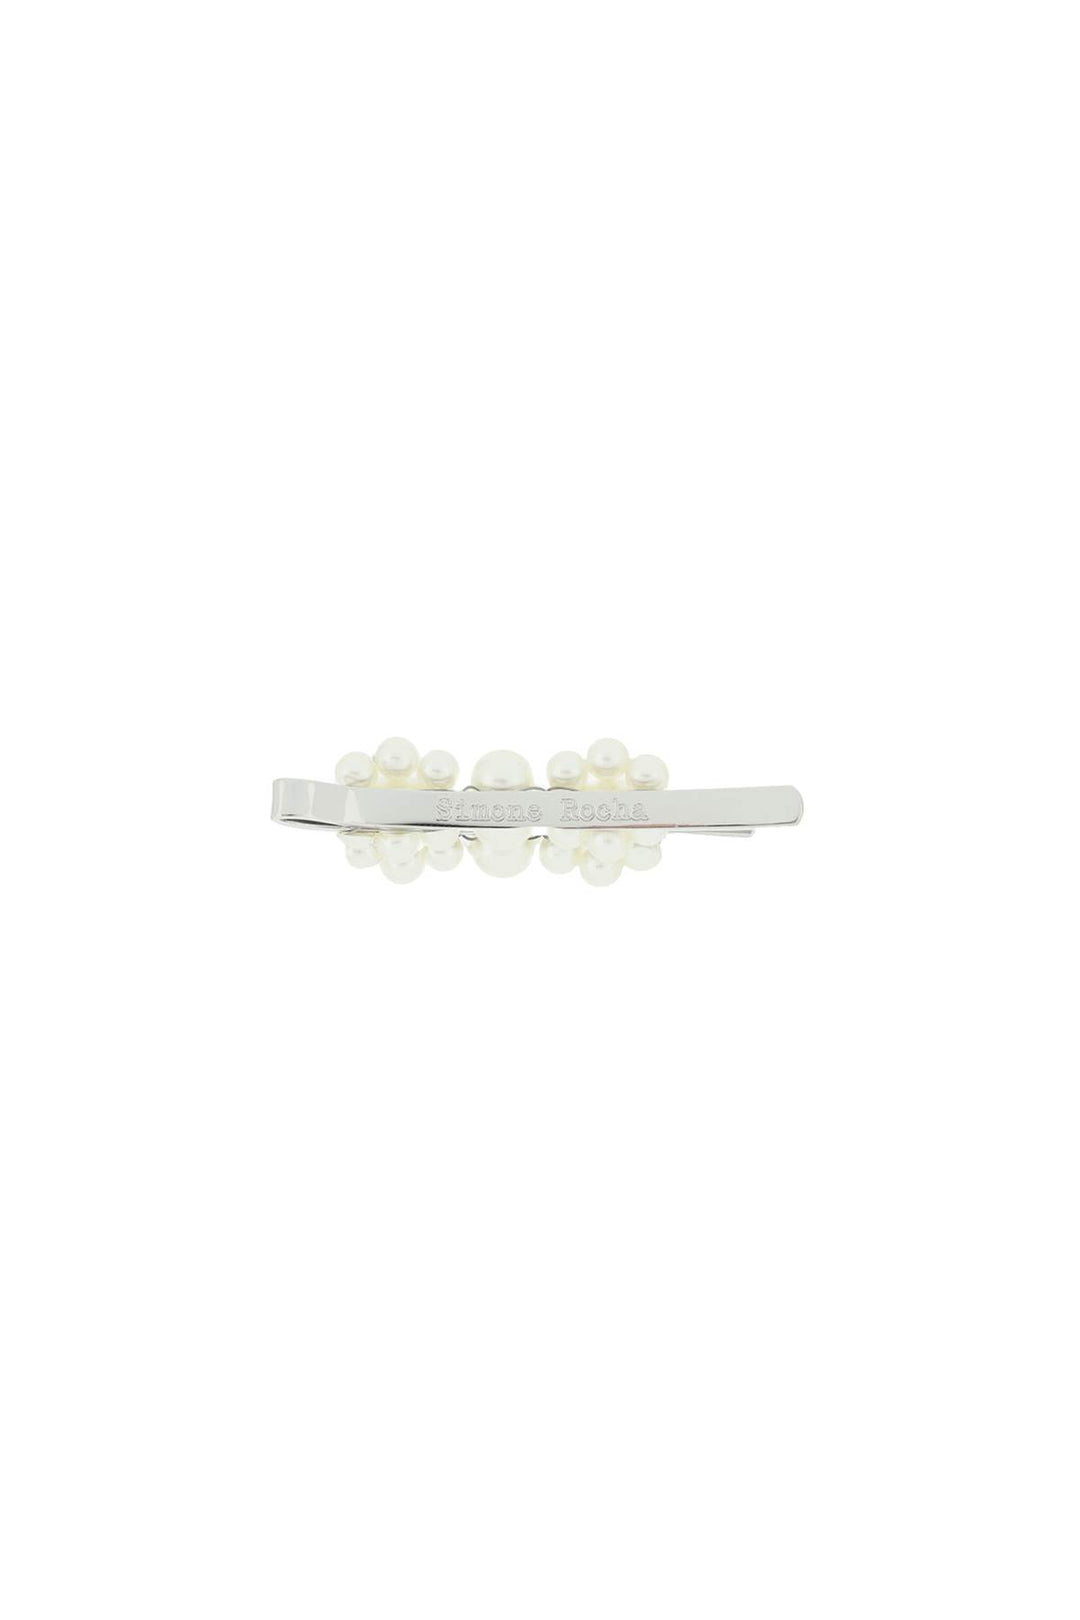 Simone Rocha Mini Flower Hair Clip With Pearls   Bianco